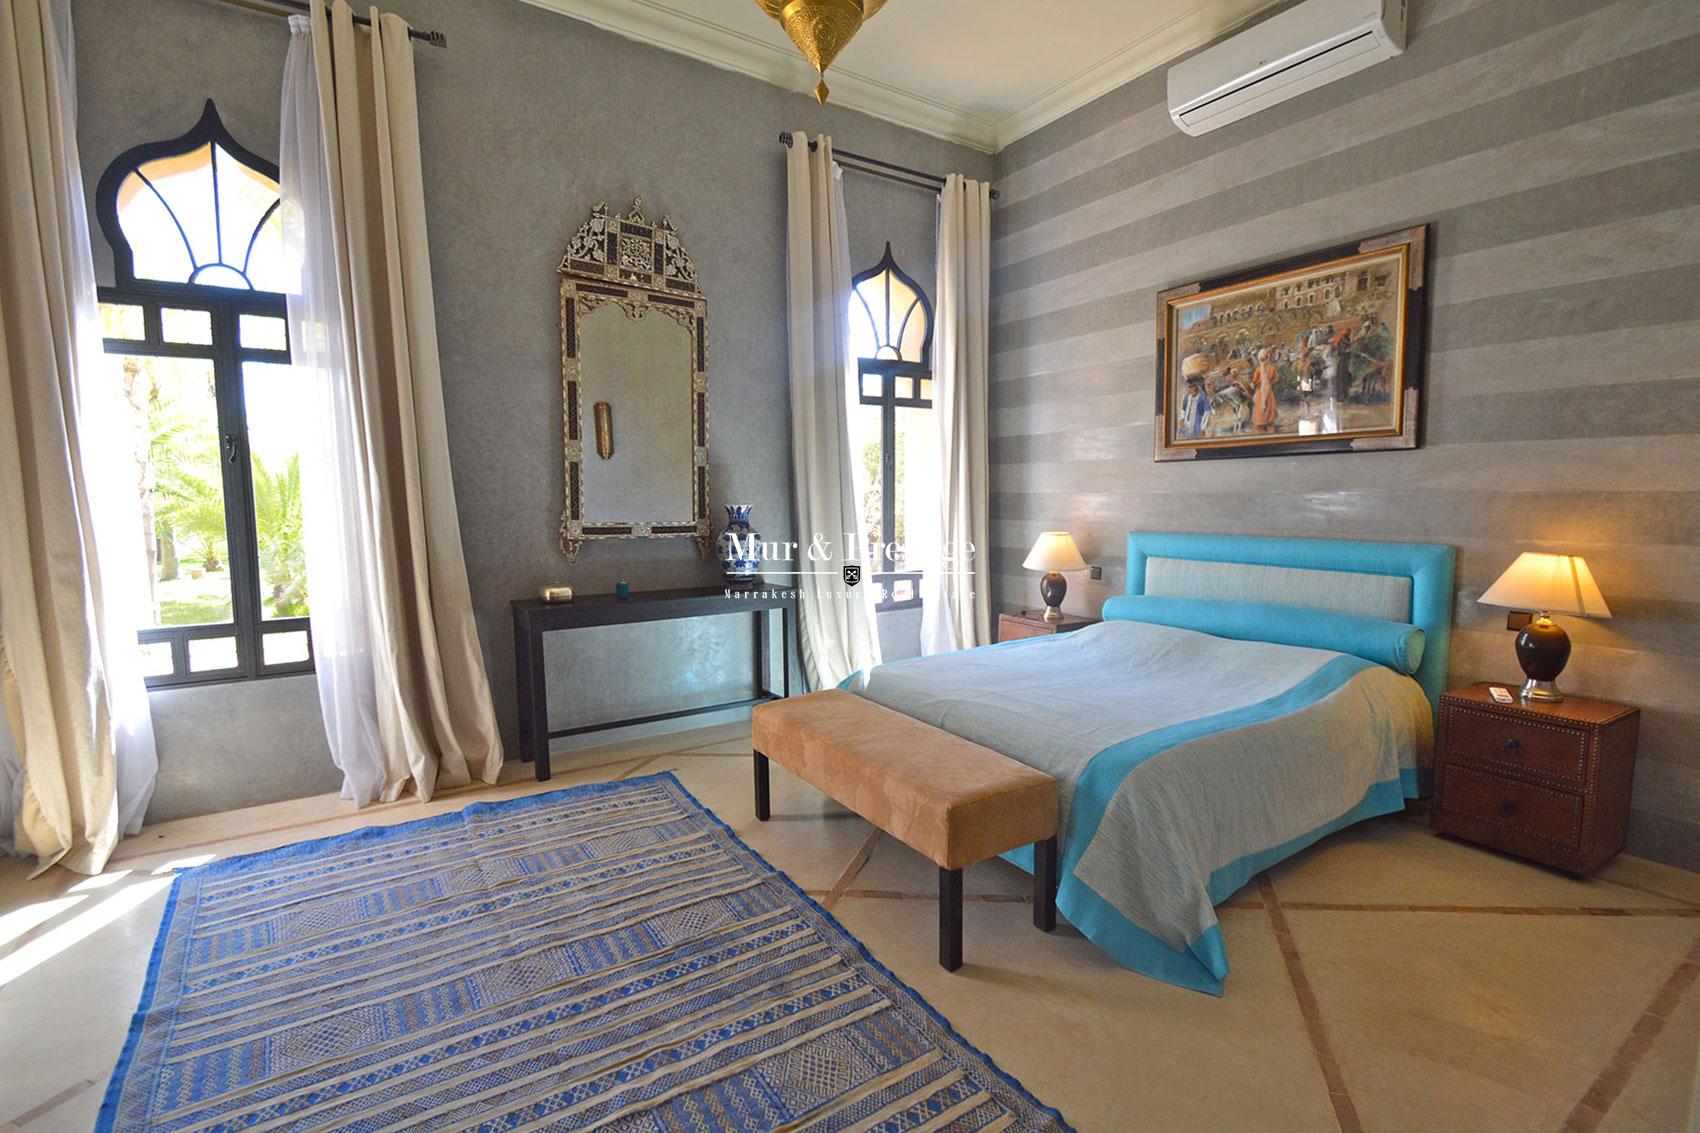 Vente villa de charme Marrakech - copie